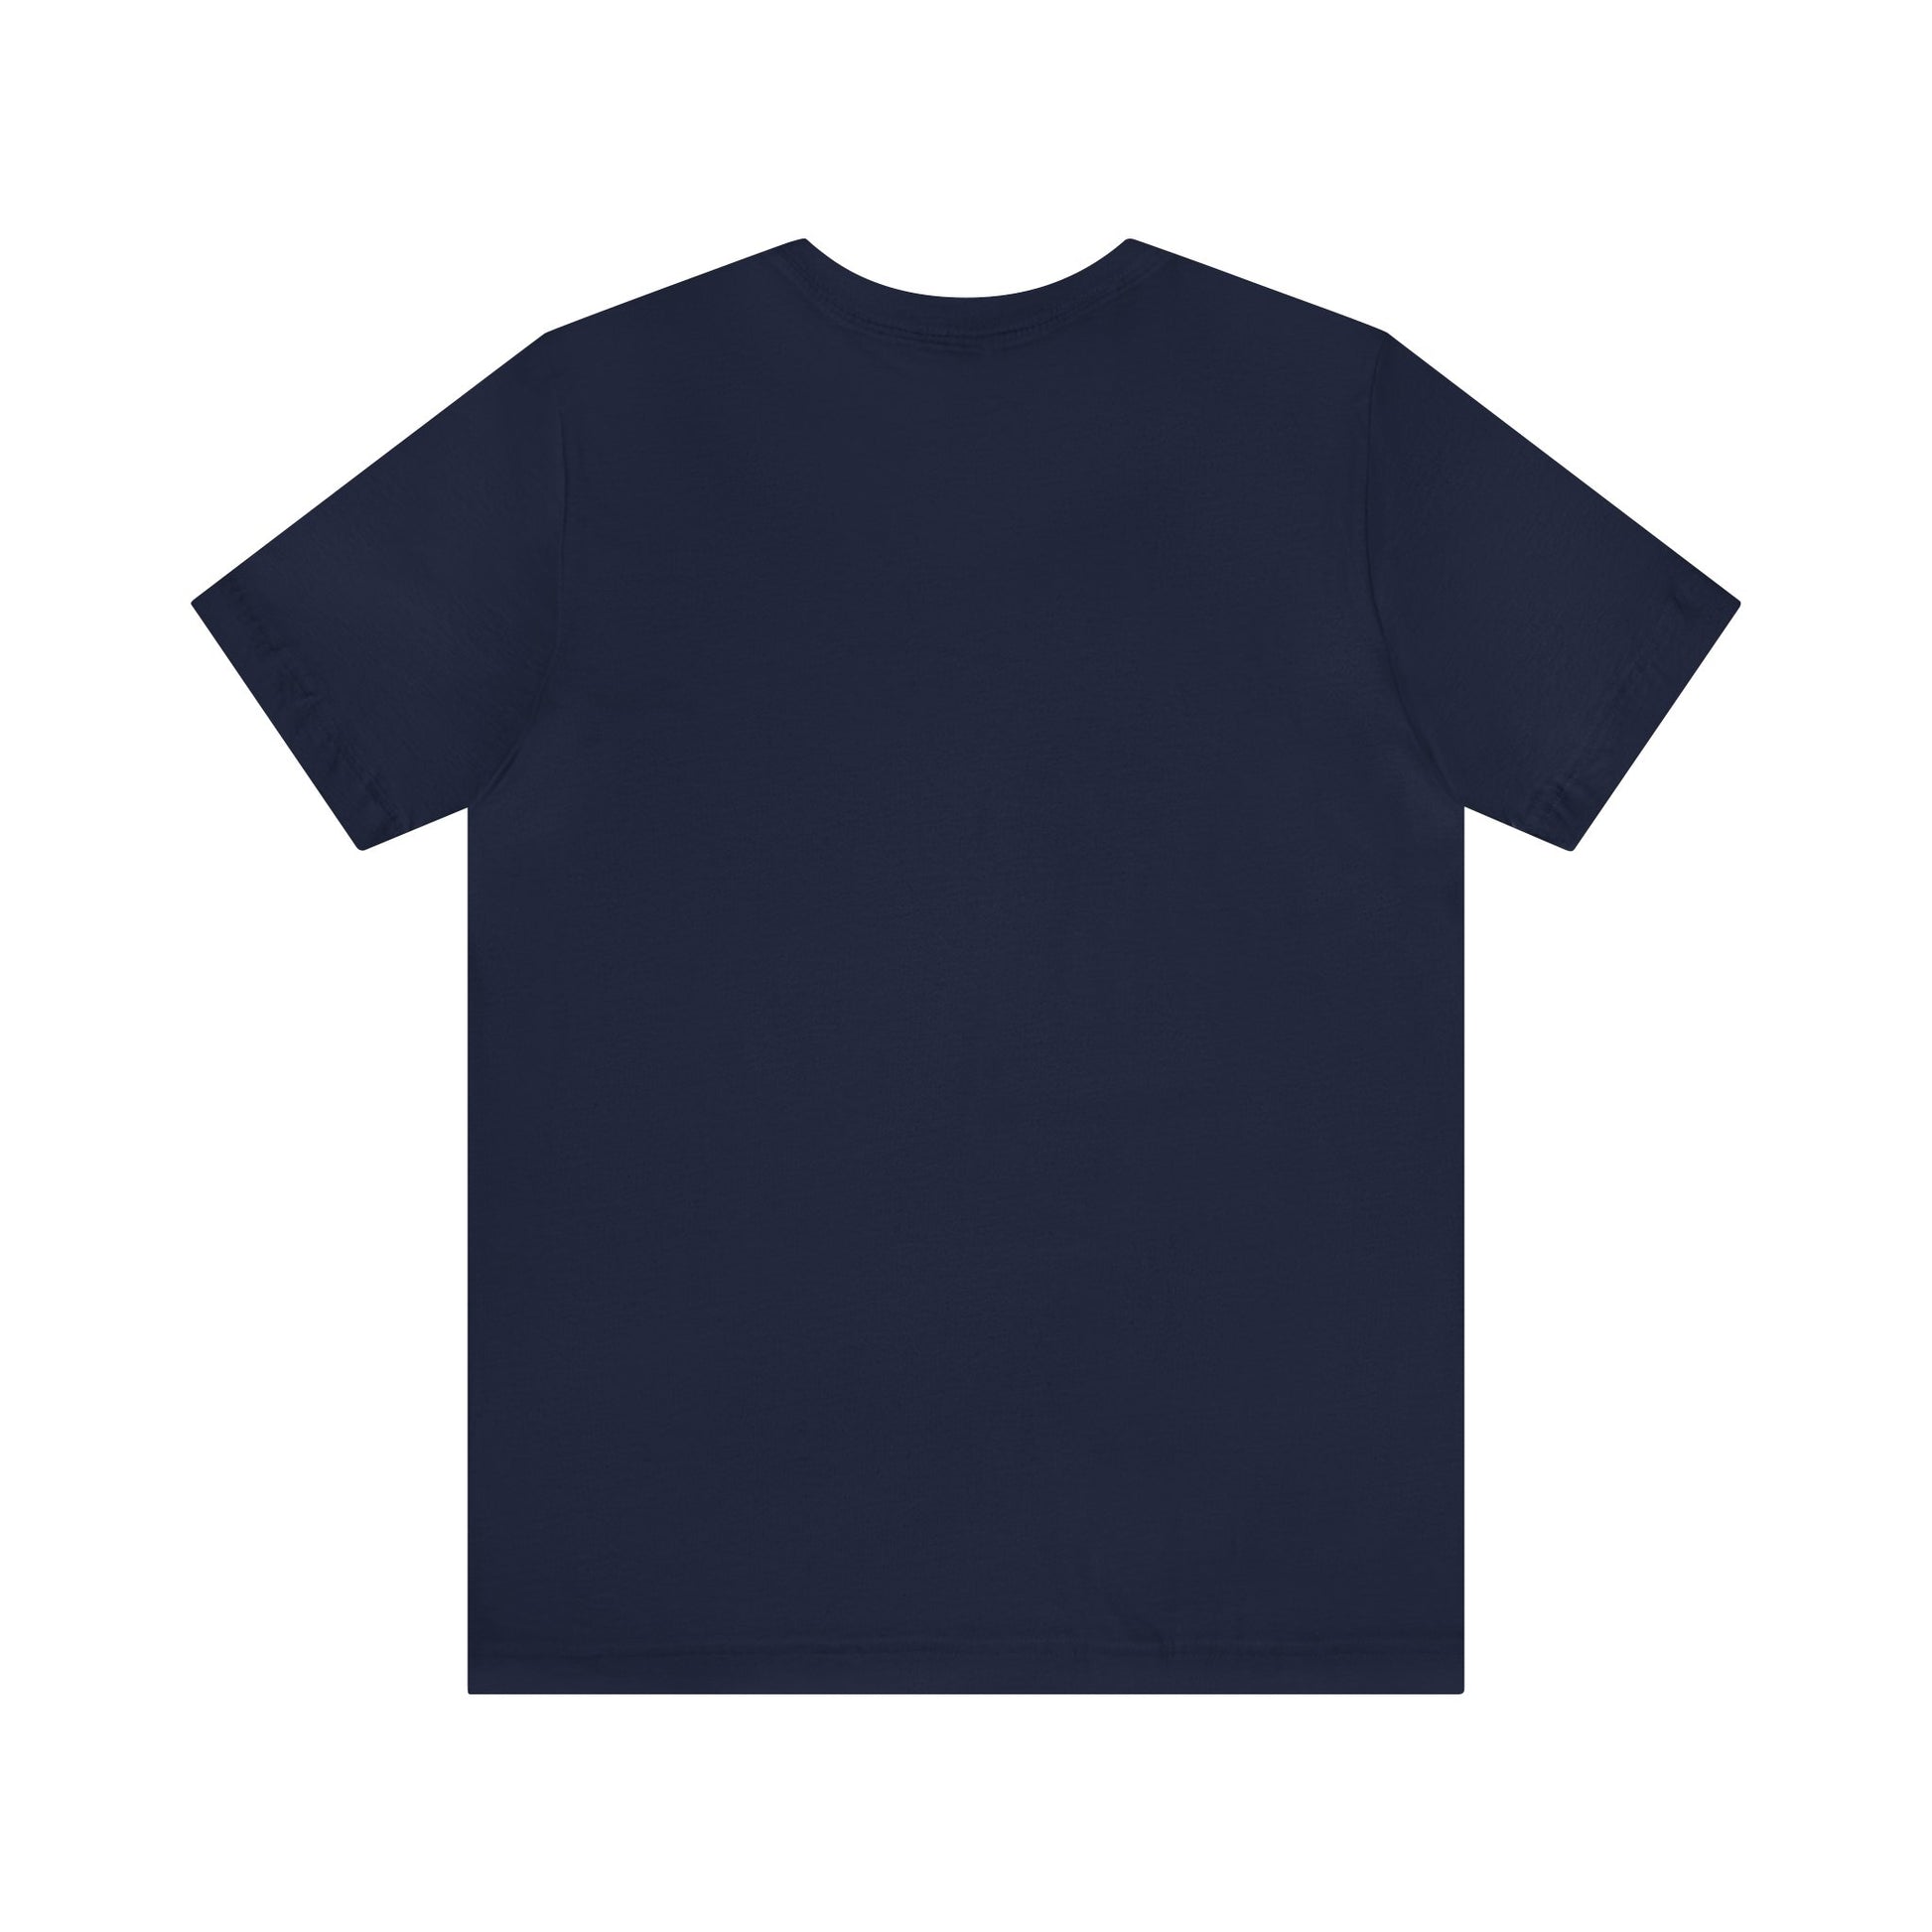 Lunavox ASD T-Shirt